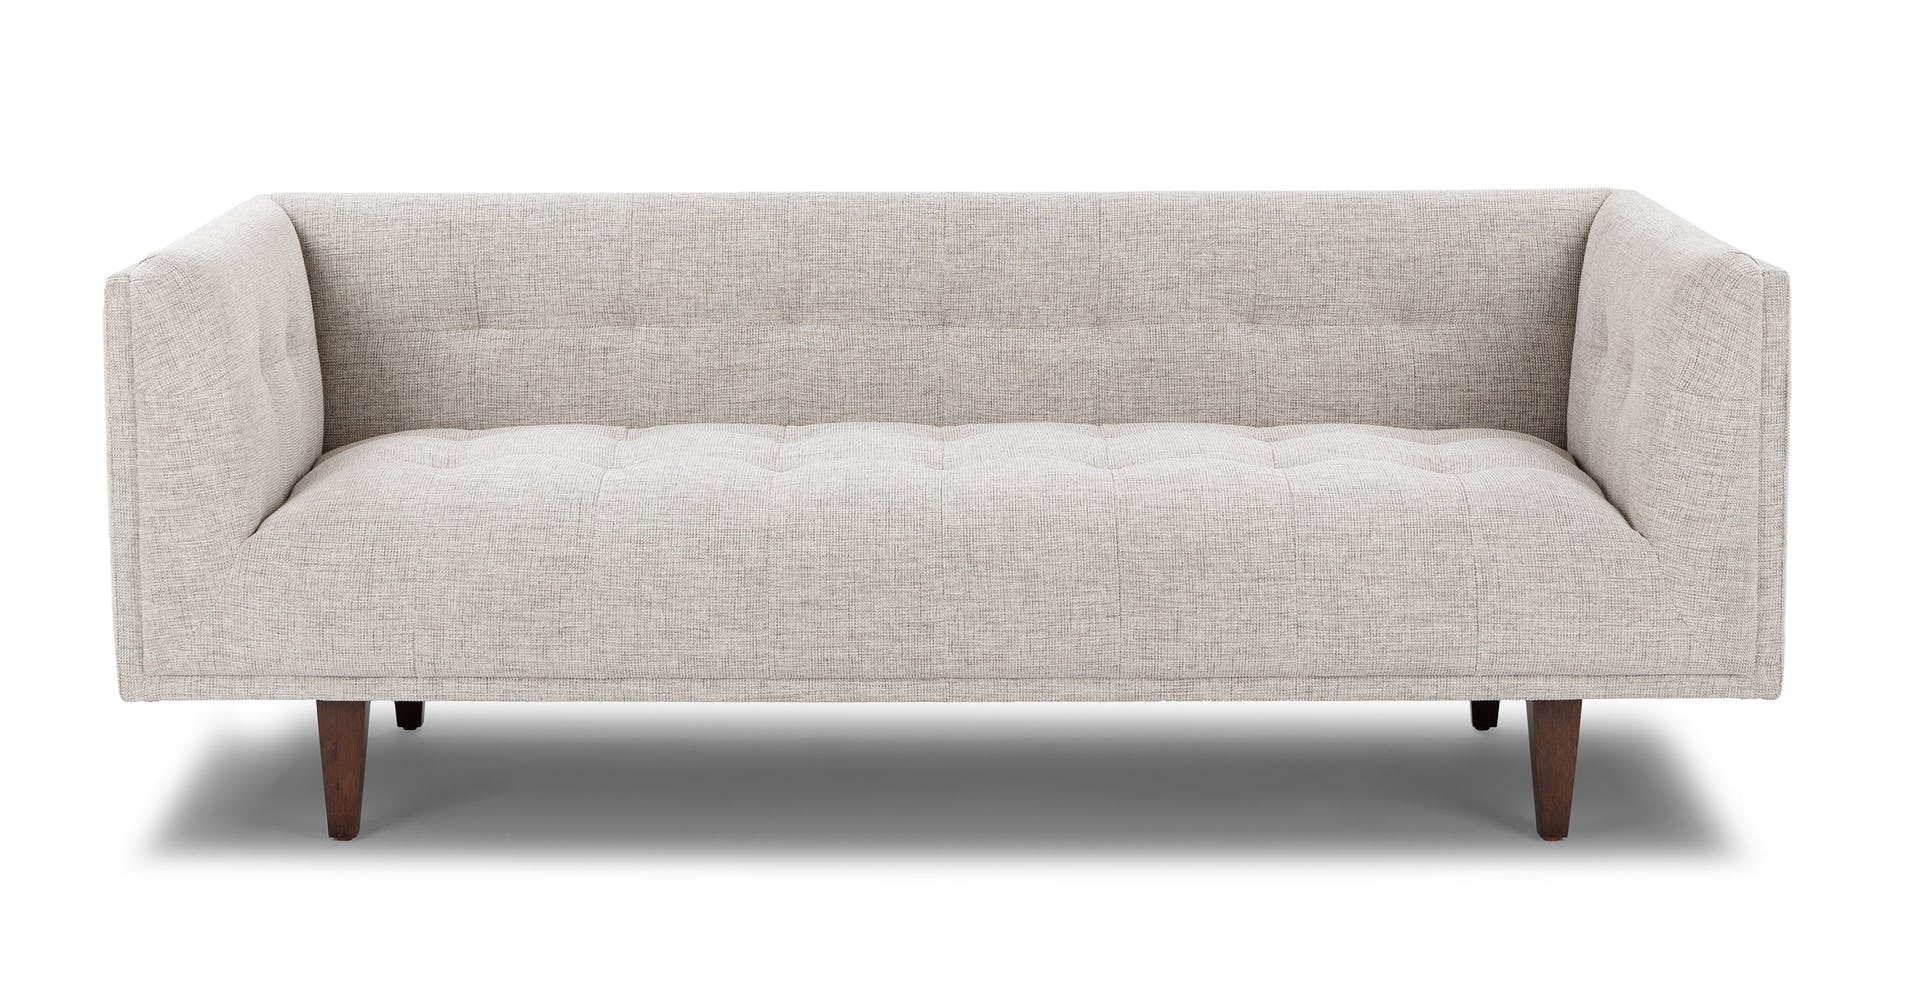 Cirrus Sofa in Birch Ivory - Image 0